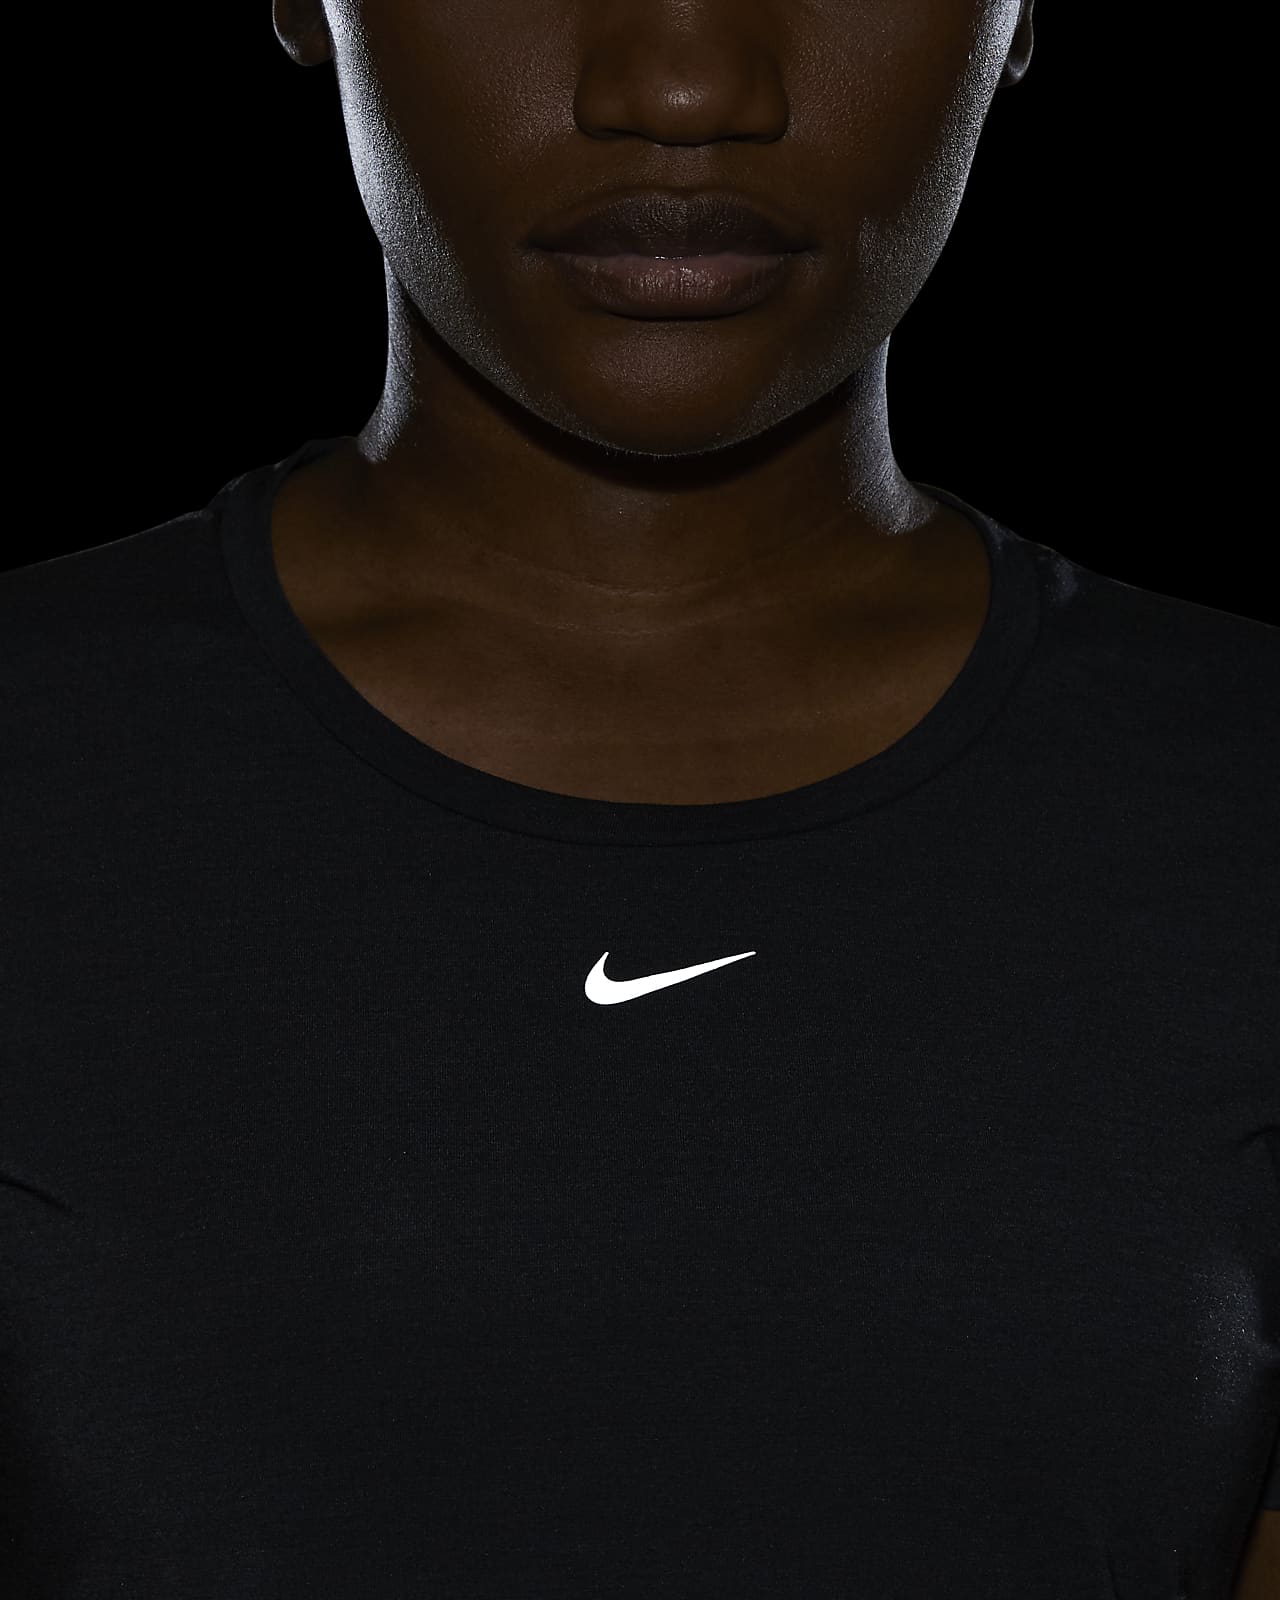 Nike Dri-FIT UV One Luxe Women\'s Standard Fit Short-Sleeve Top.